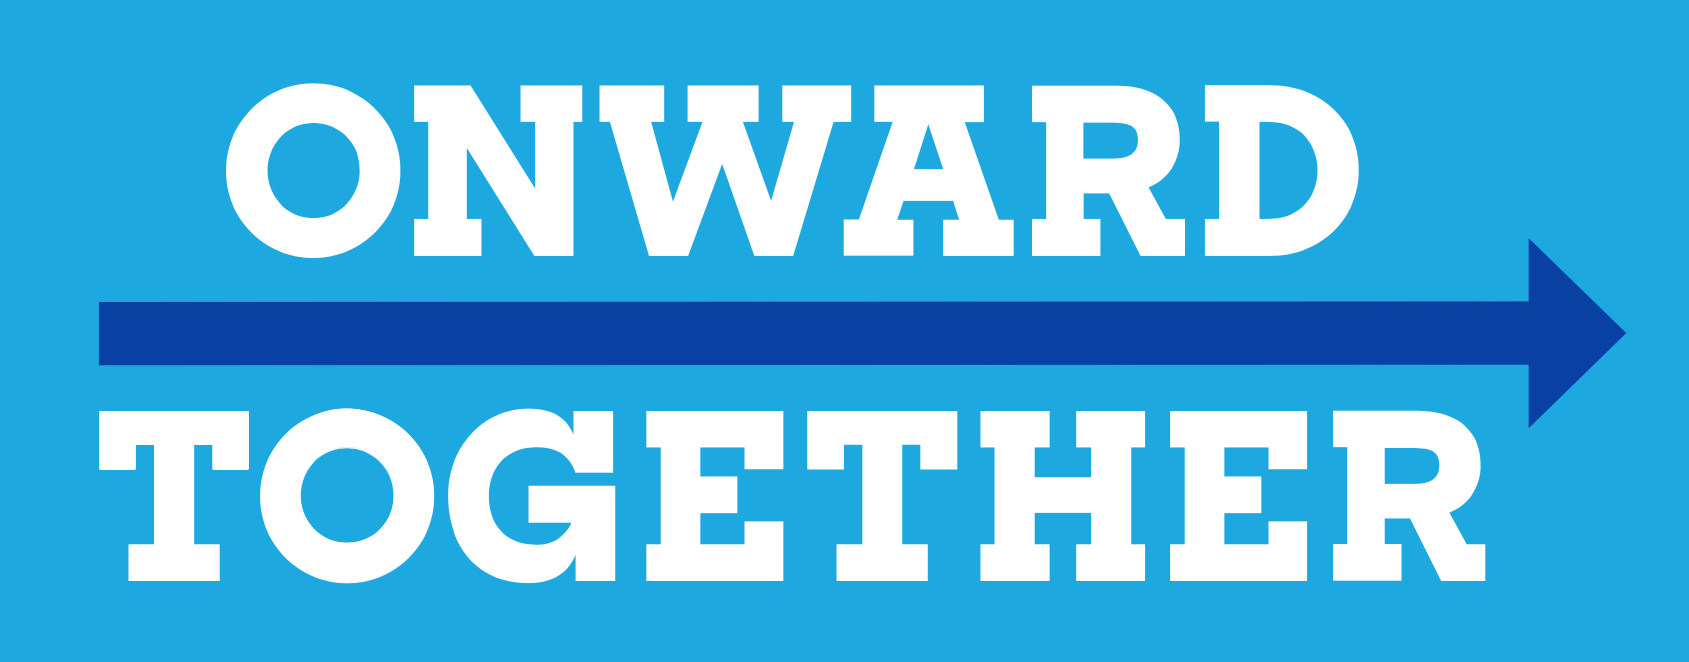 Онвард логотип. Onward logo PNG. Together logo. Help together logo. Since happened